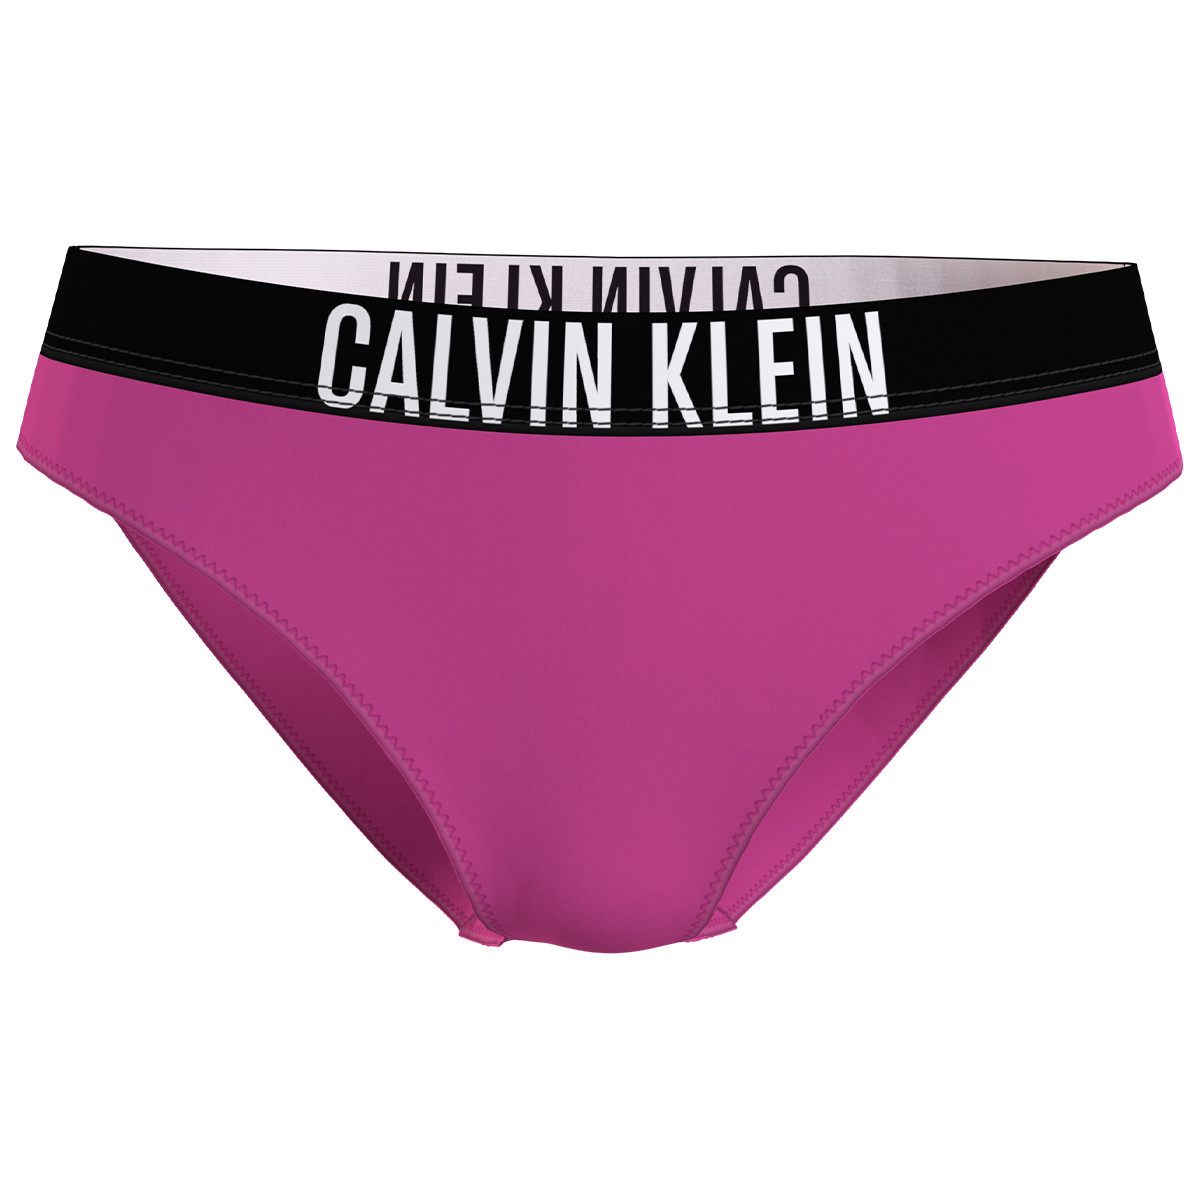 Calvin Klein Tai Bikini Trusse, Farve: Stunning Orchid, Størrelse: M, Dame